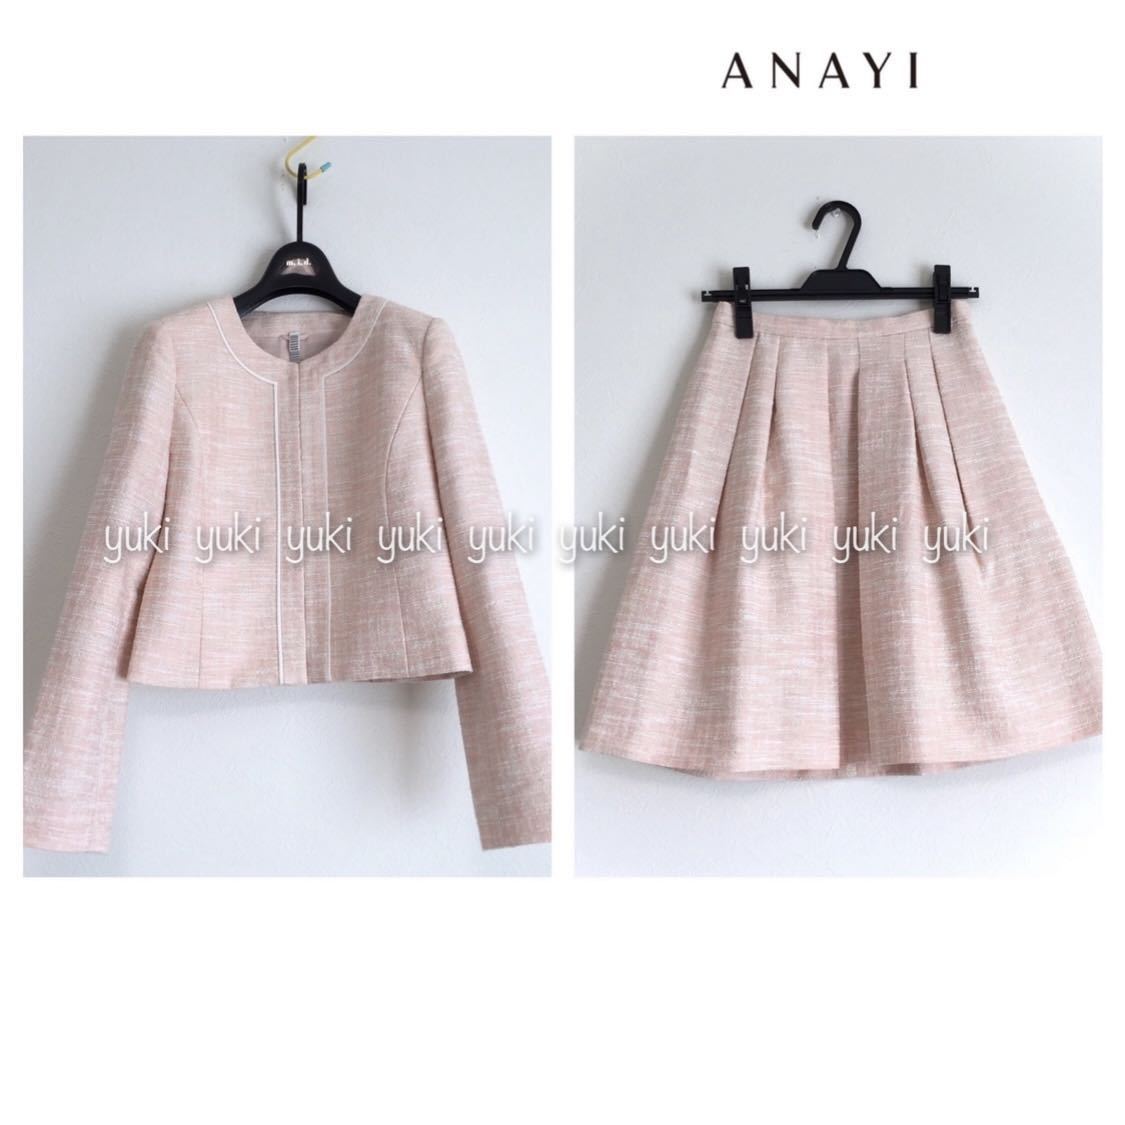 ANAYI スカートスーツ セットアップ 36 ピンク ジャガード